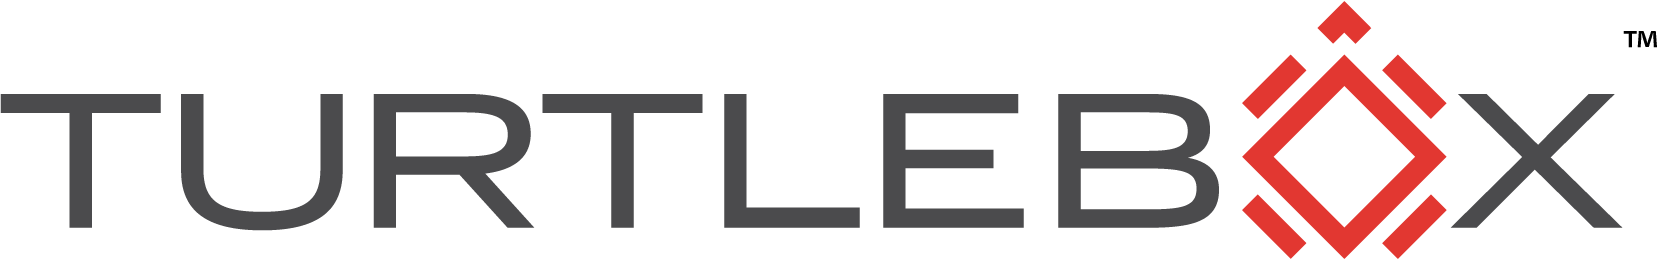 turtlebox_logo_final_version-03-1 (1).png